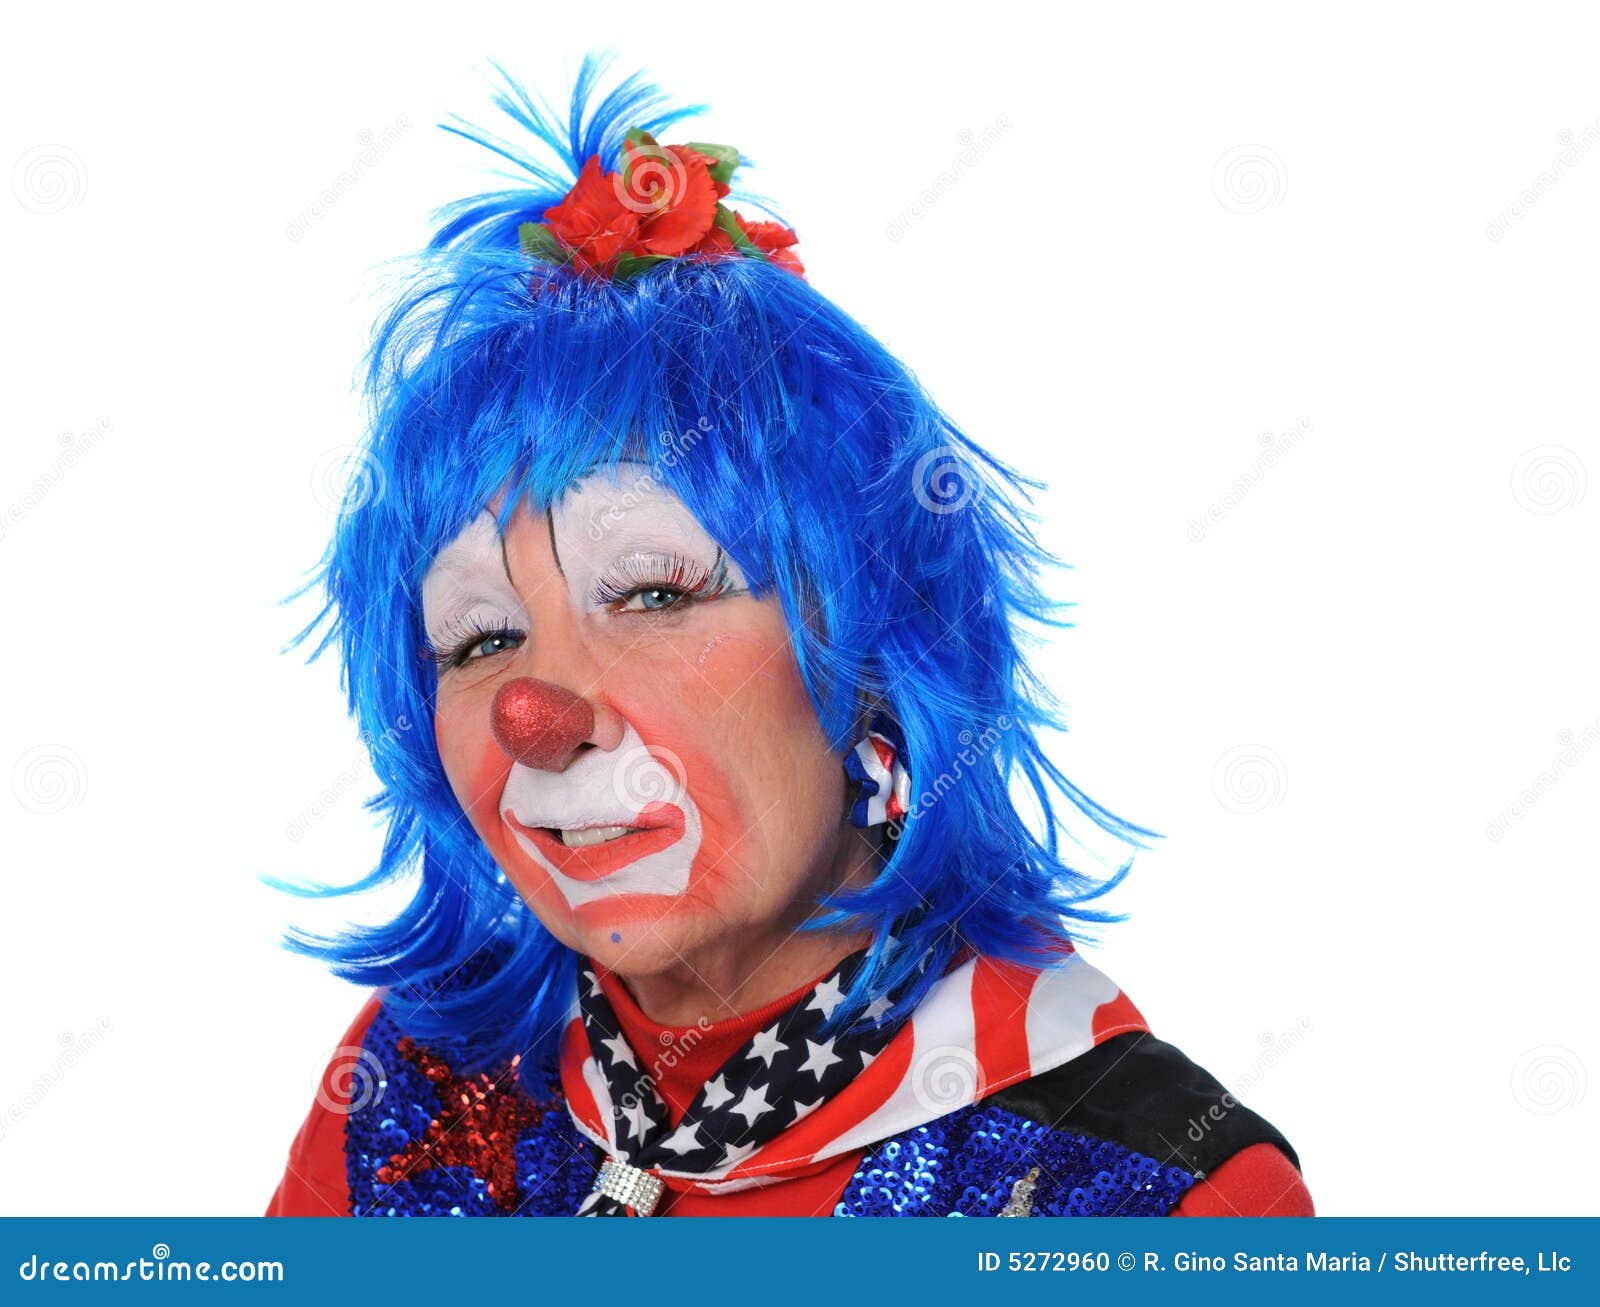 Blue Hair Clown Nose - wide 5